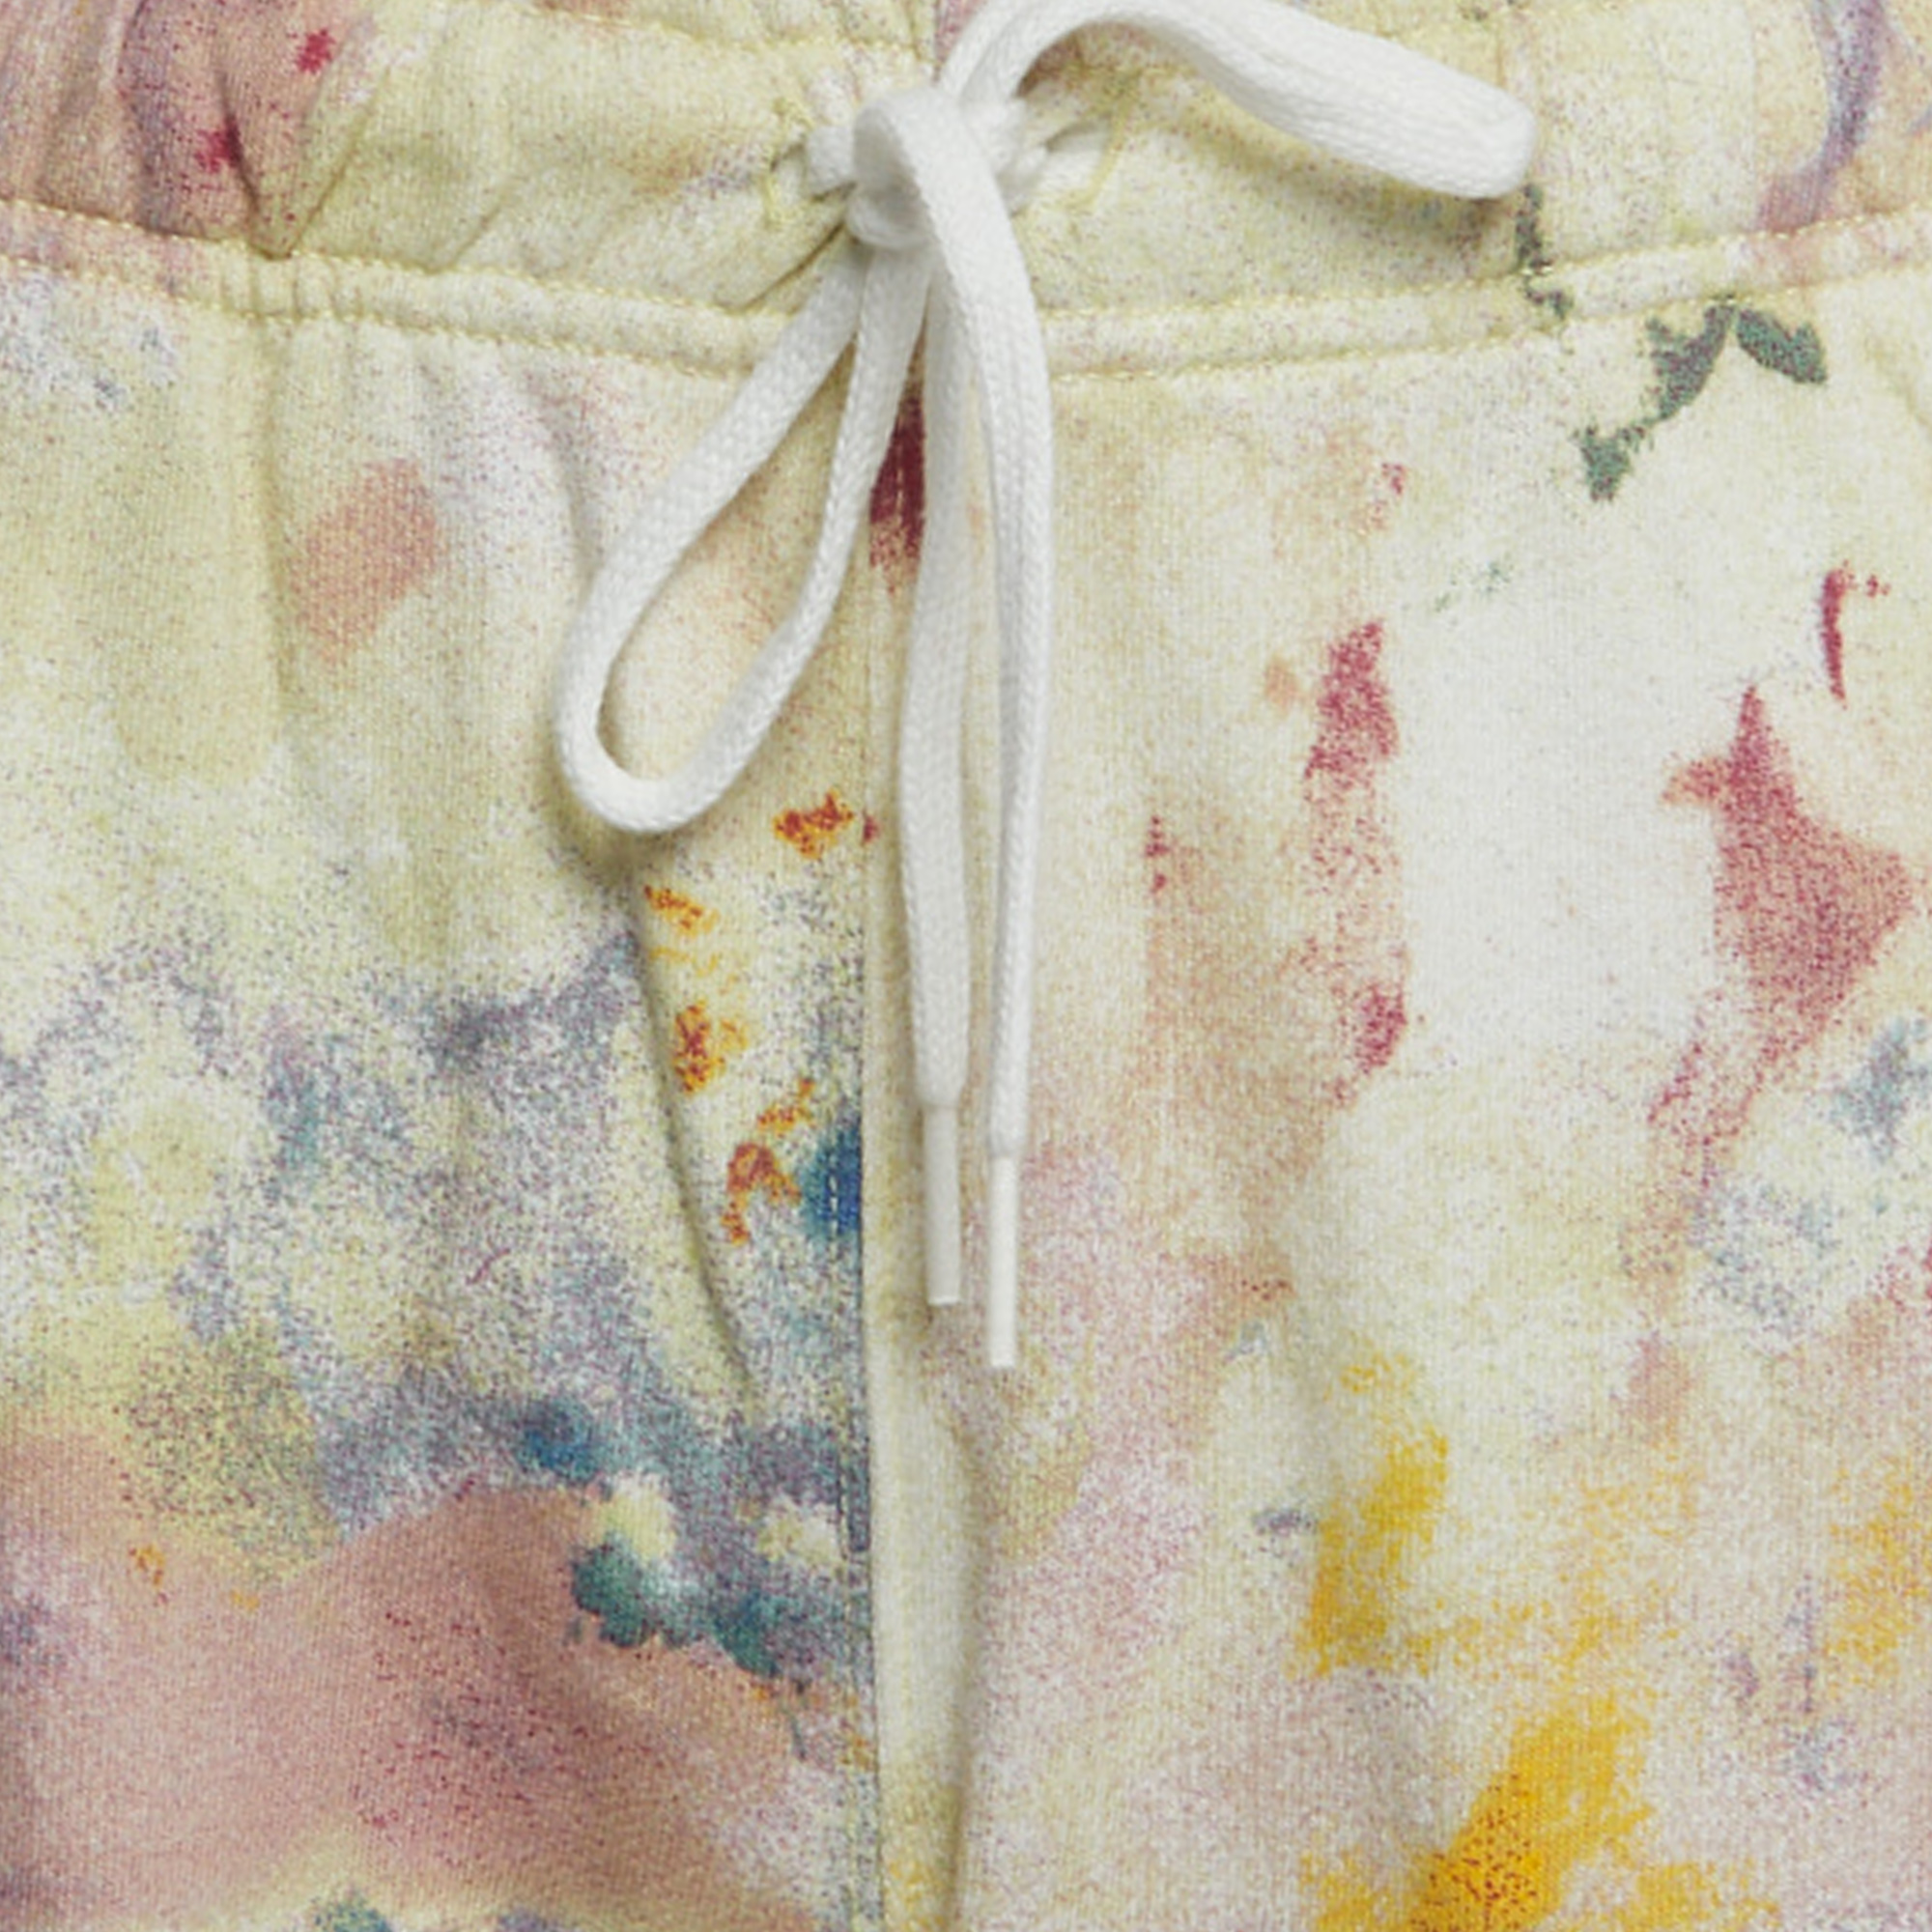 Polo Ralph Lauren Multicolor Tie-dye Cotton Drawstring Joggers XS